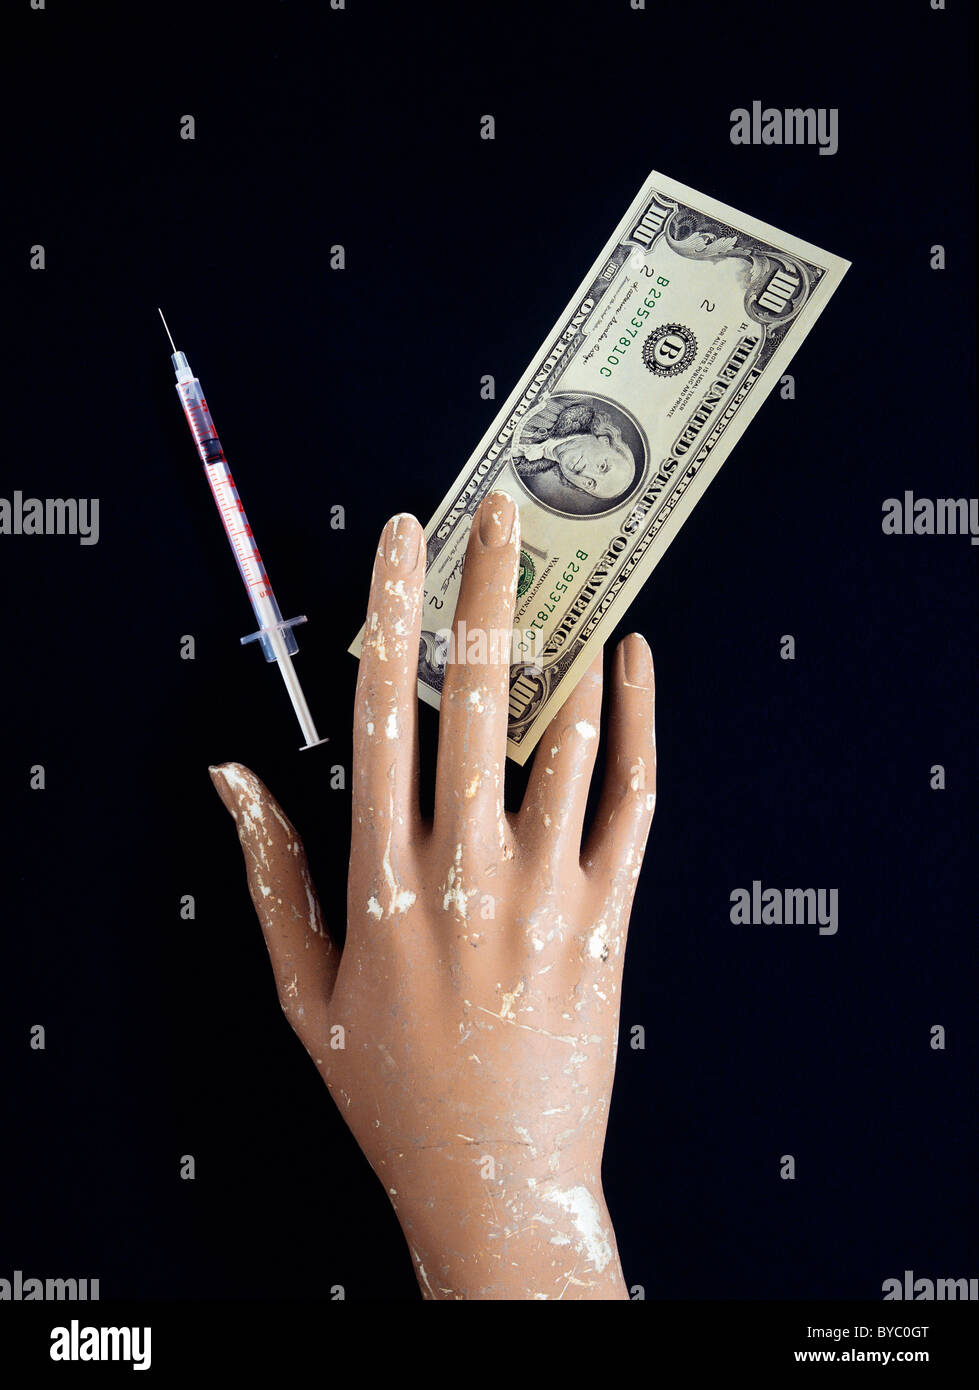 Mano ficticia con un billete de 100 dólares EE.UU. & aguja hipodérmica Foto de stock